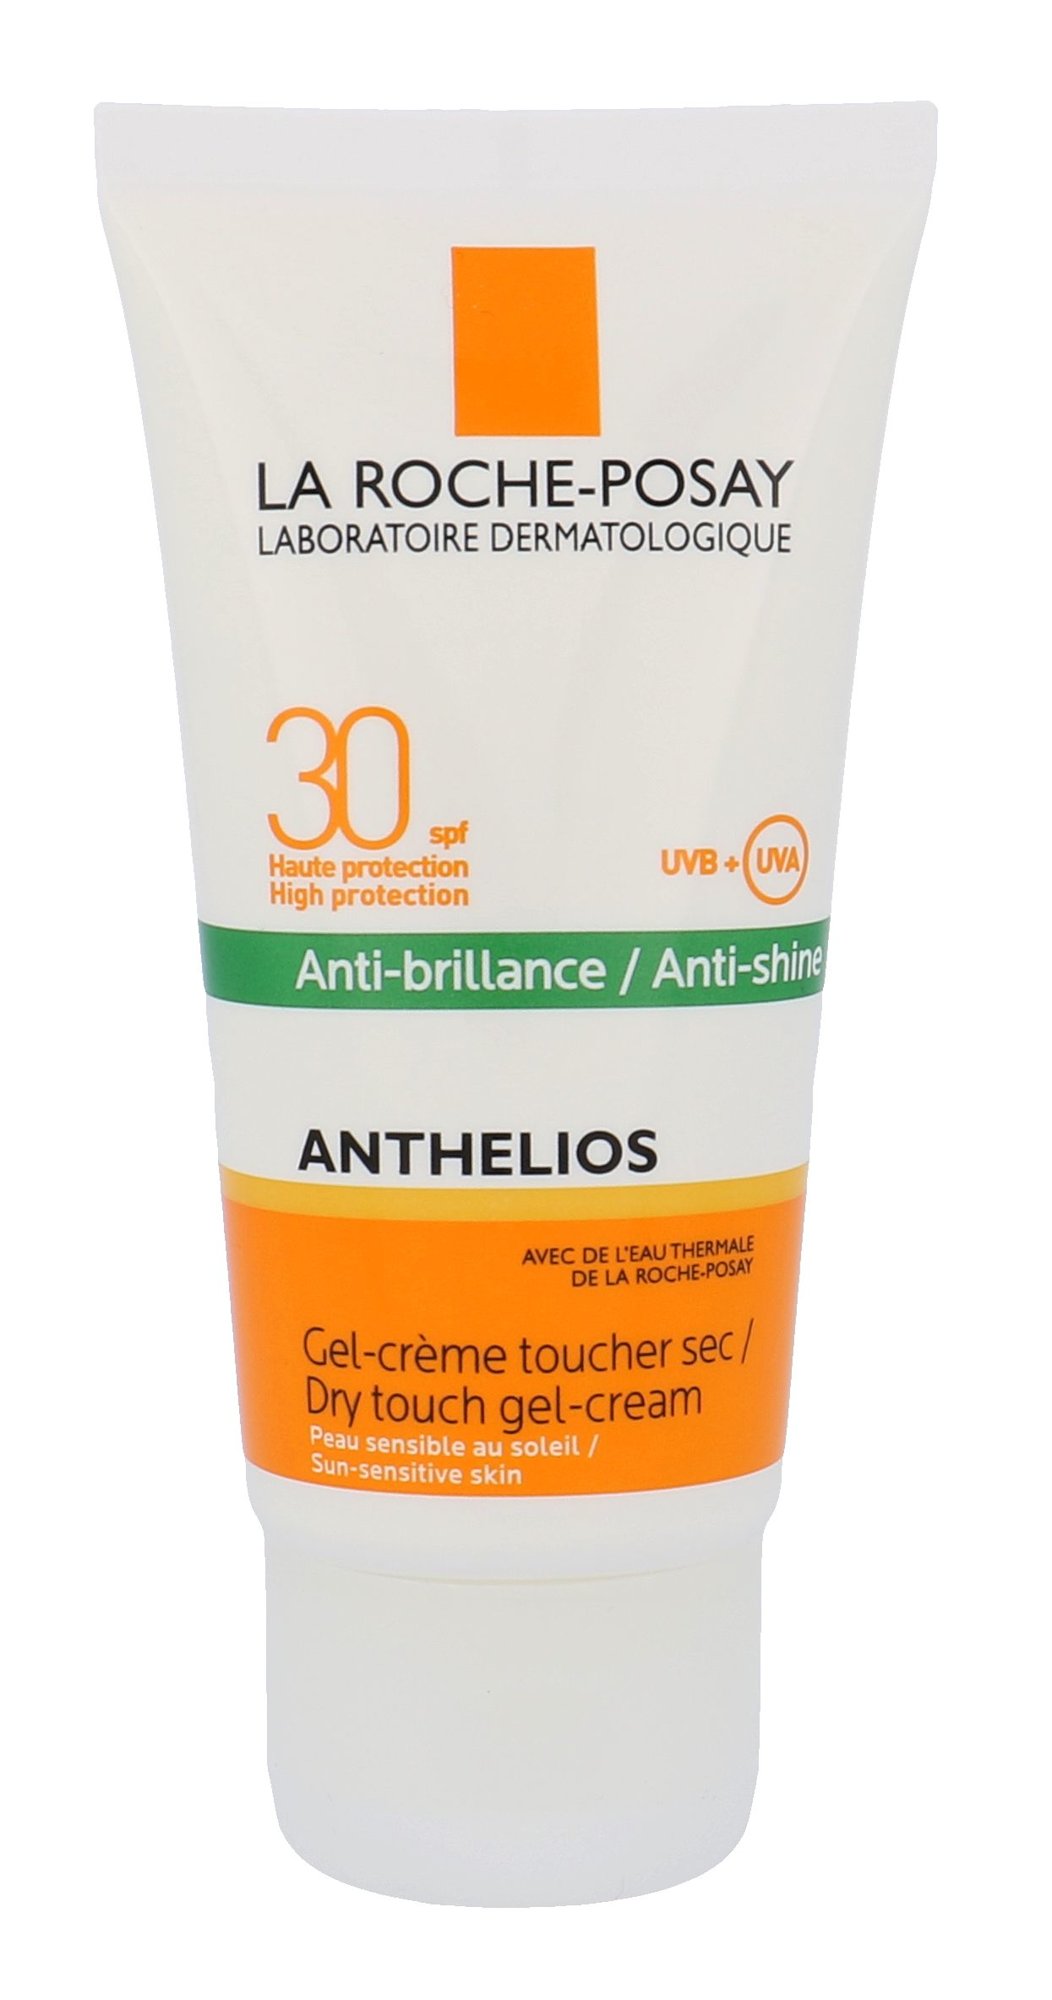 La Roche-Posay Anthelios Dry Touch Gel-Cream veido apsauga